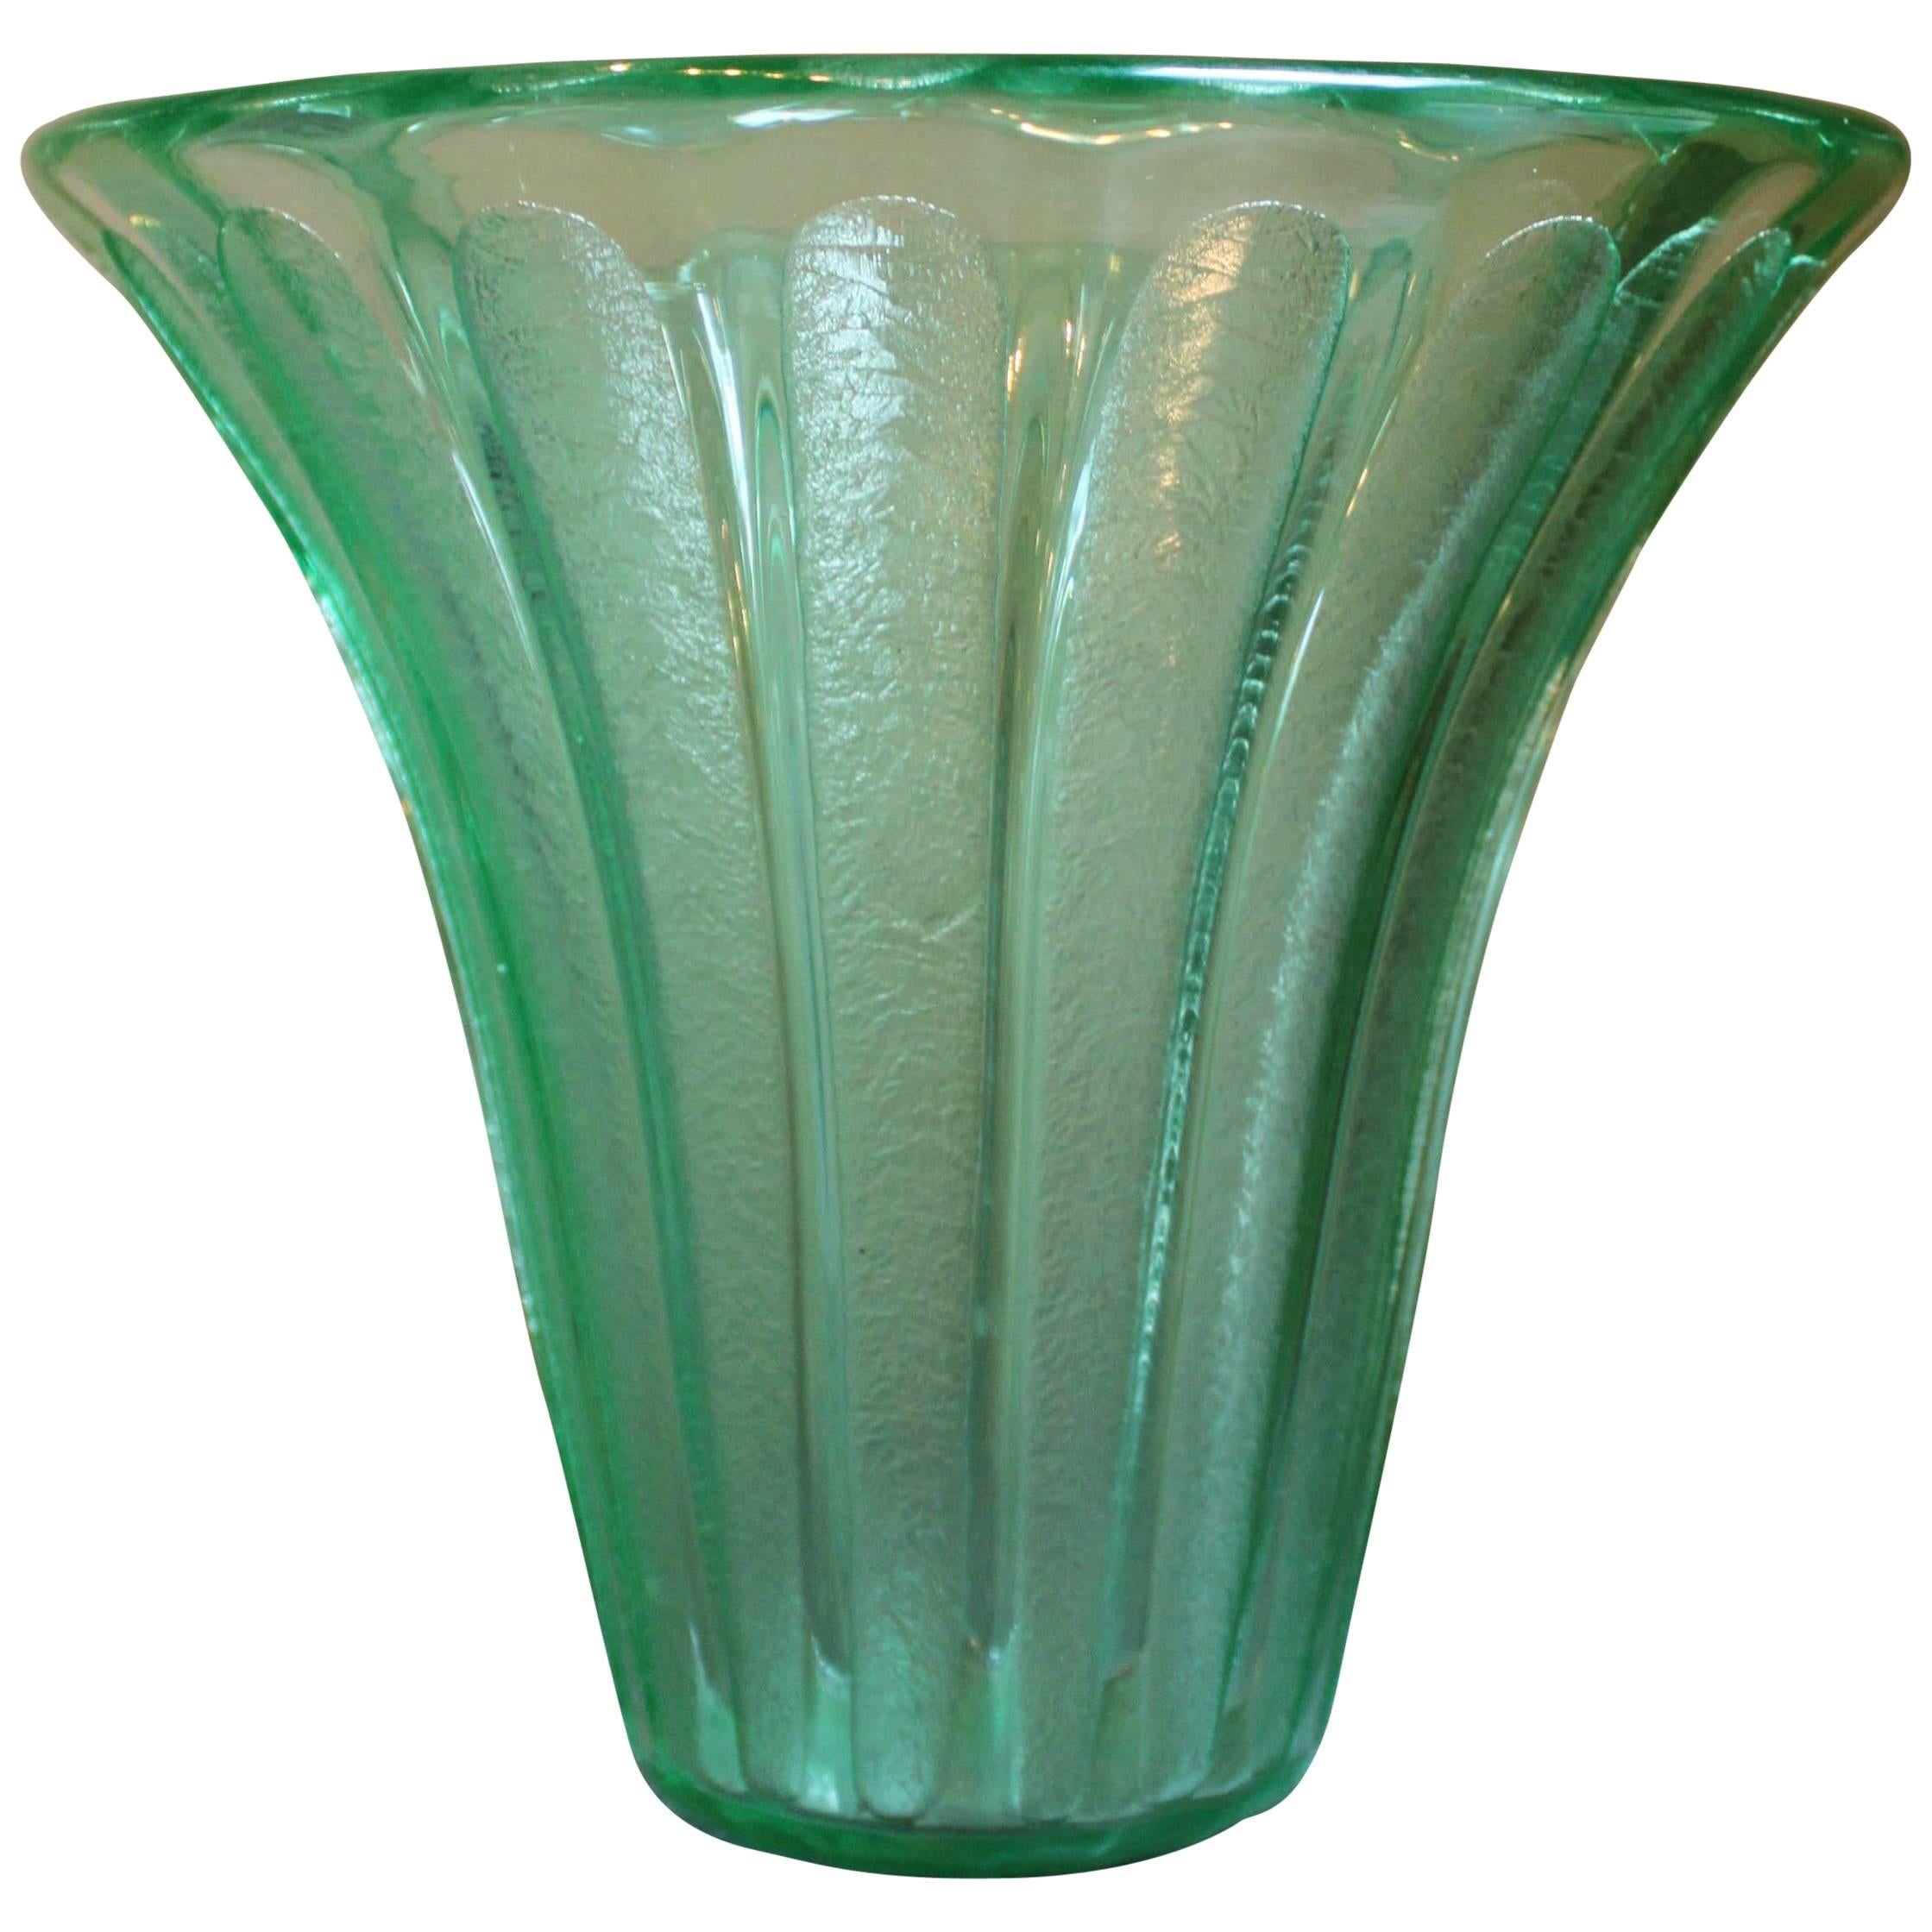 Large green glass vase signed Daum Nancy.